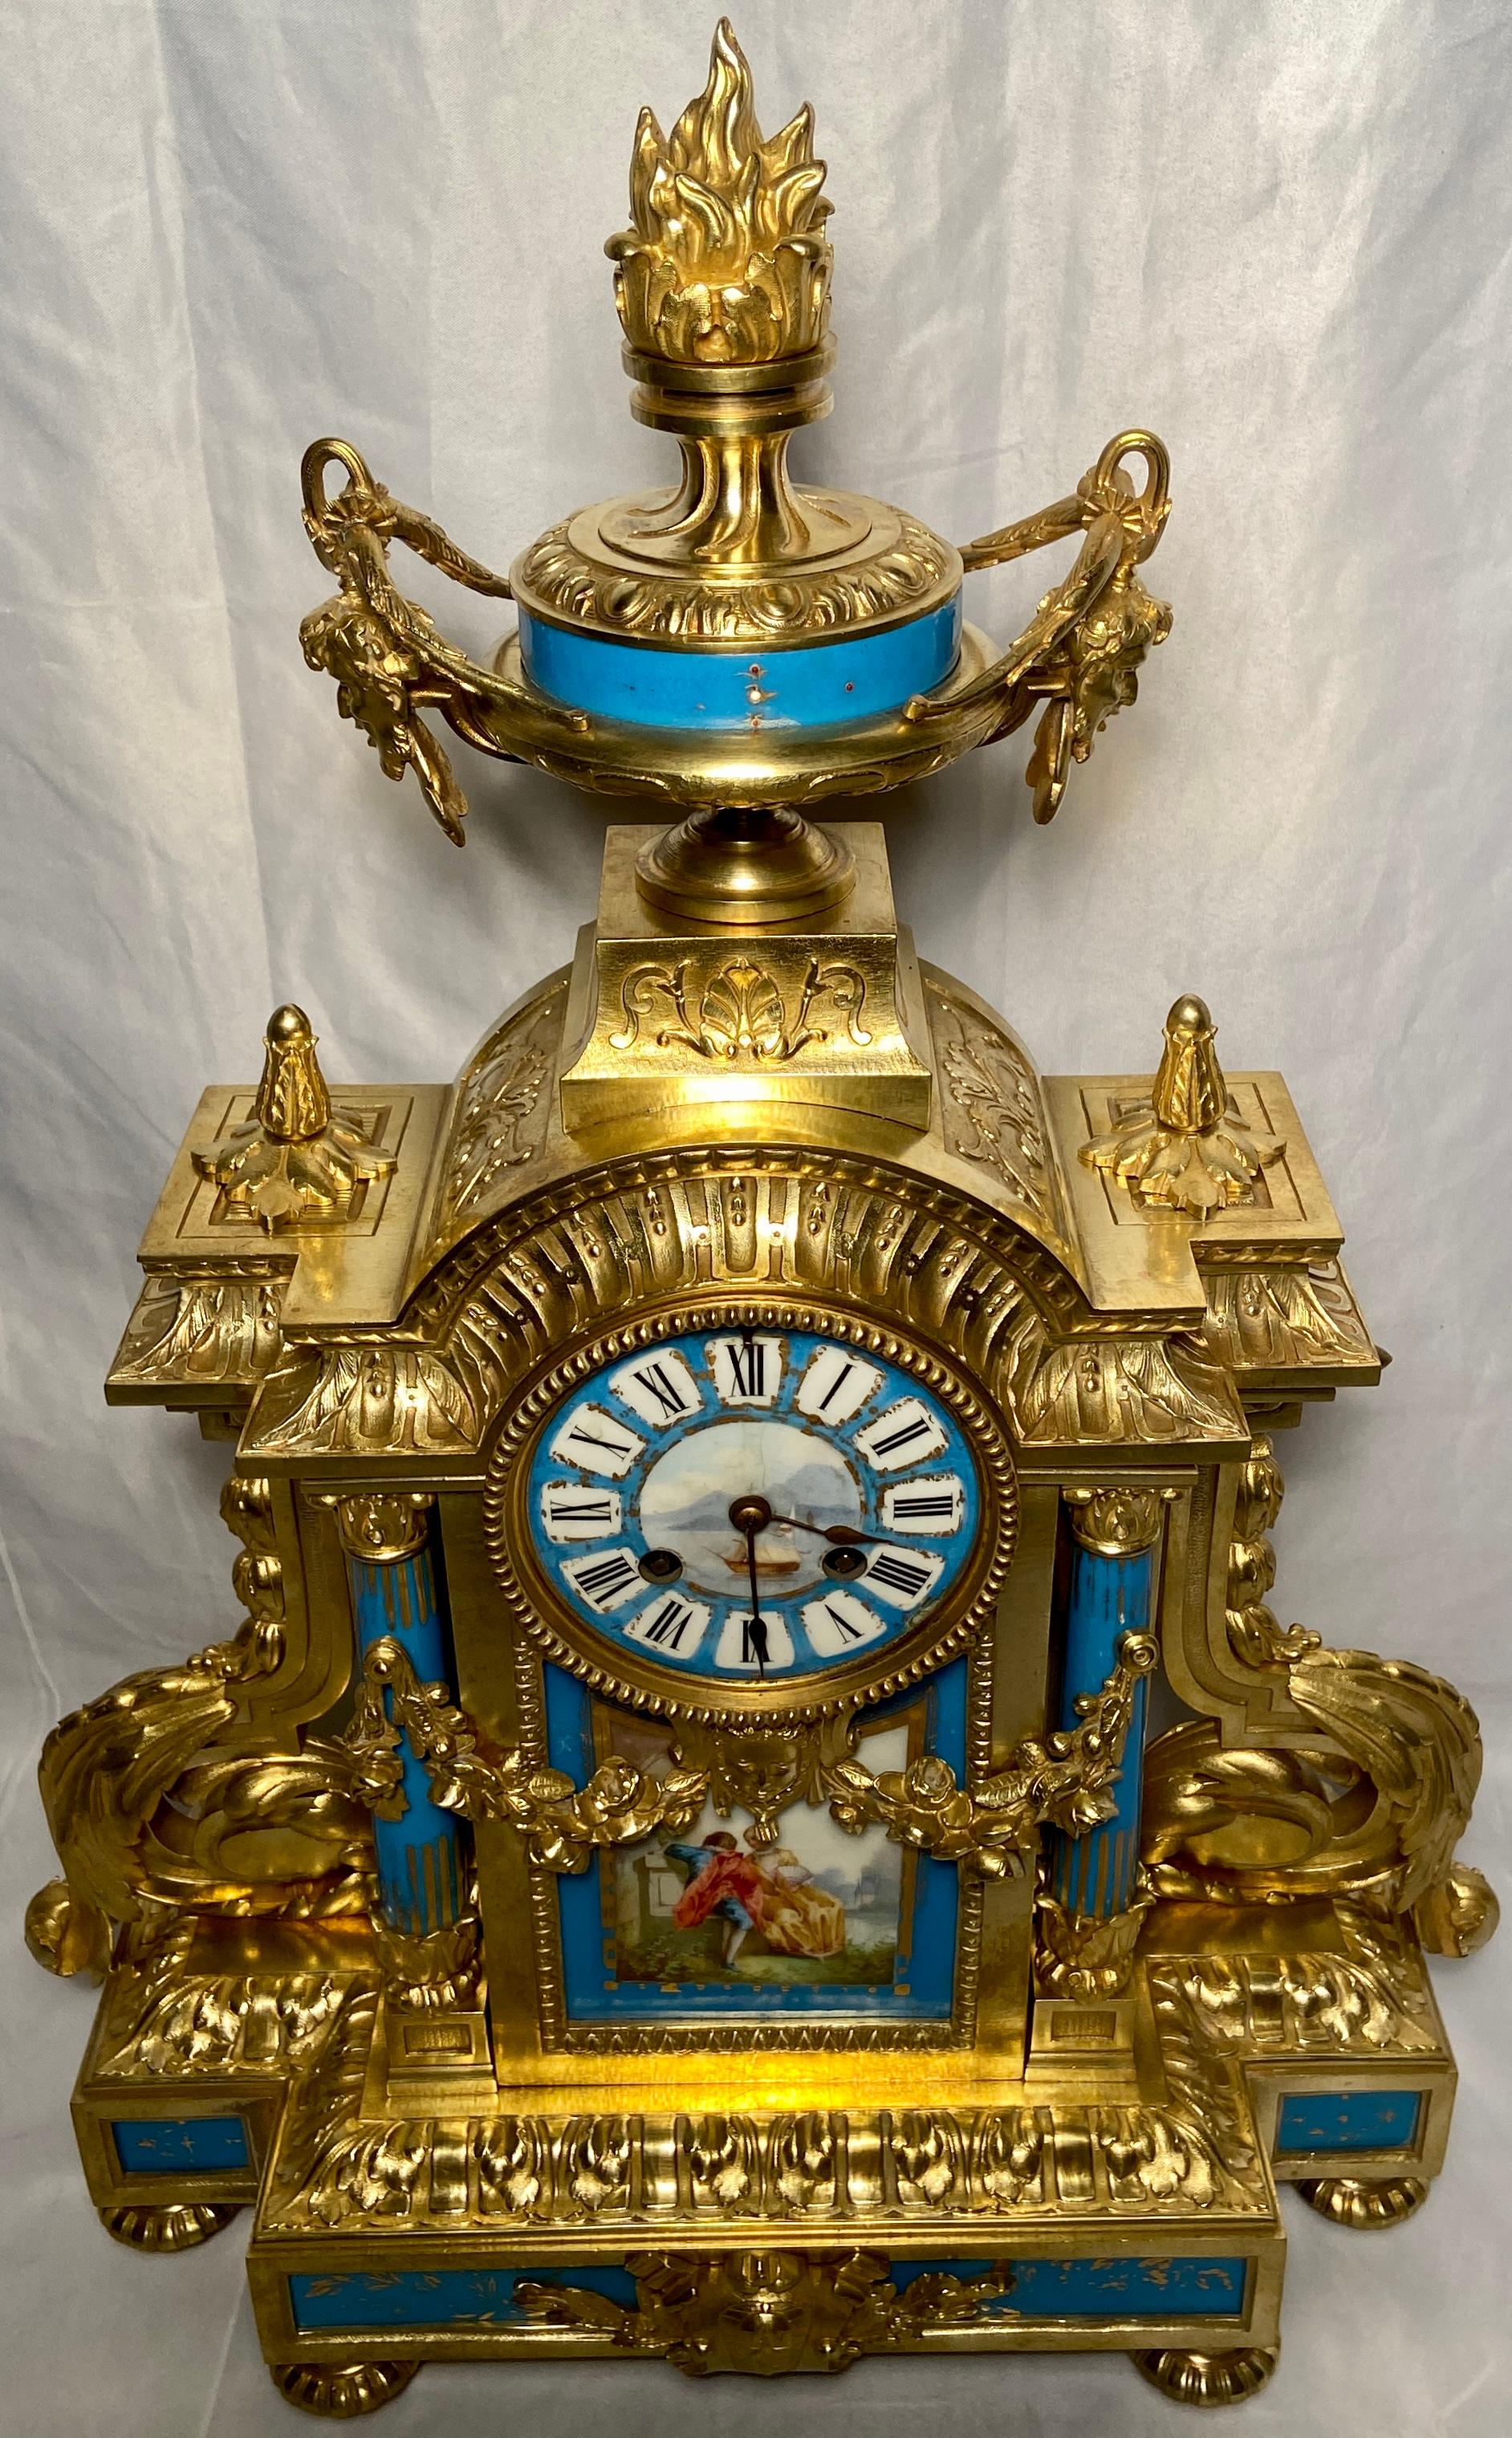 Antique French Louis XVI Blue Sèvres Porcelain and Ormolu Mounted Clock, circa 1875-85.